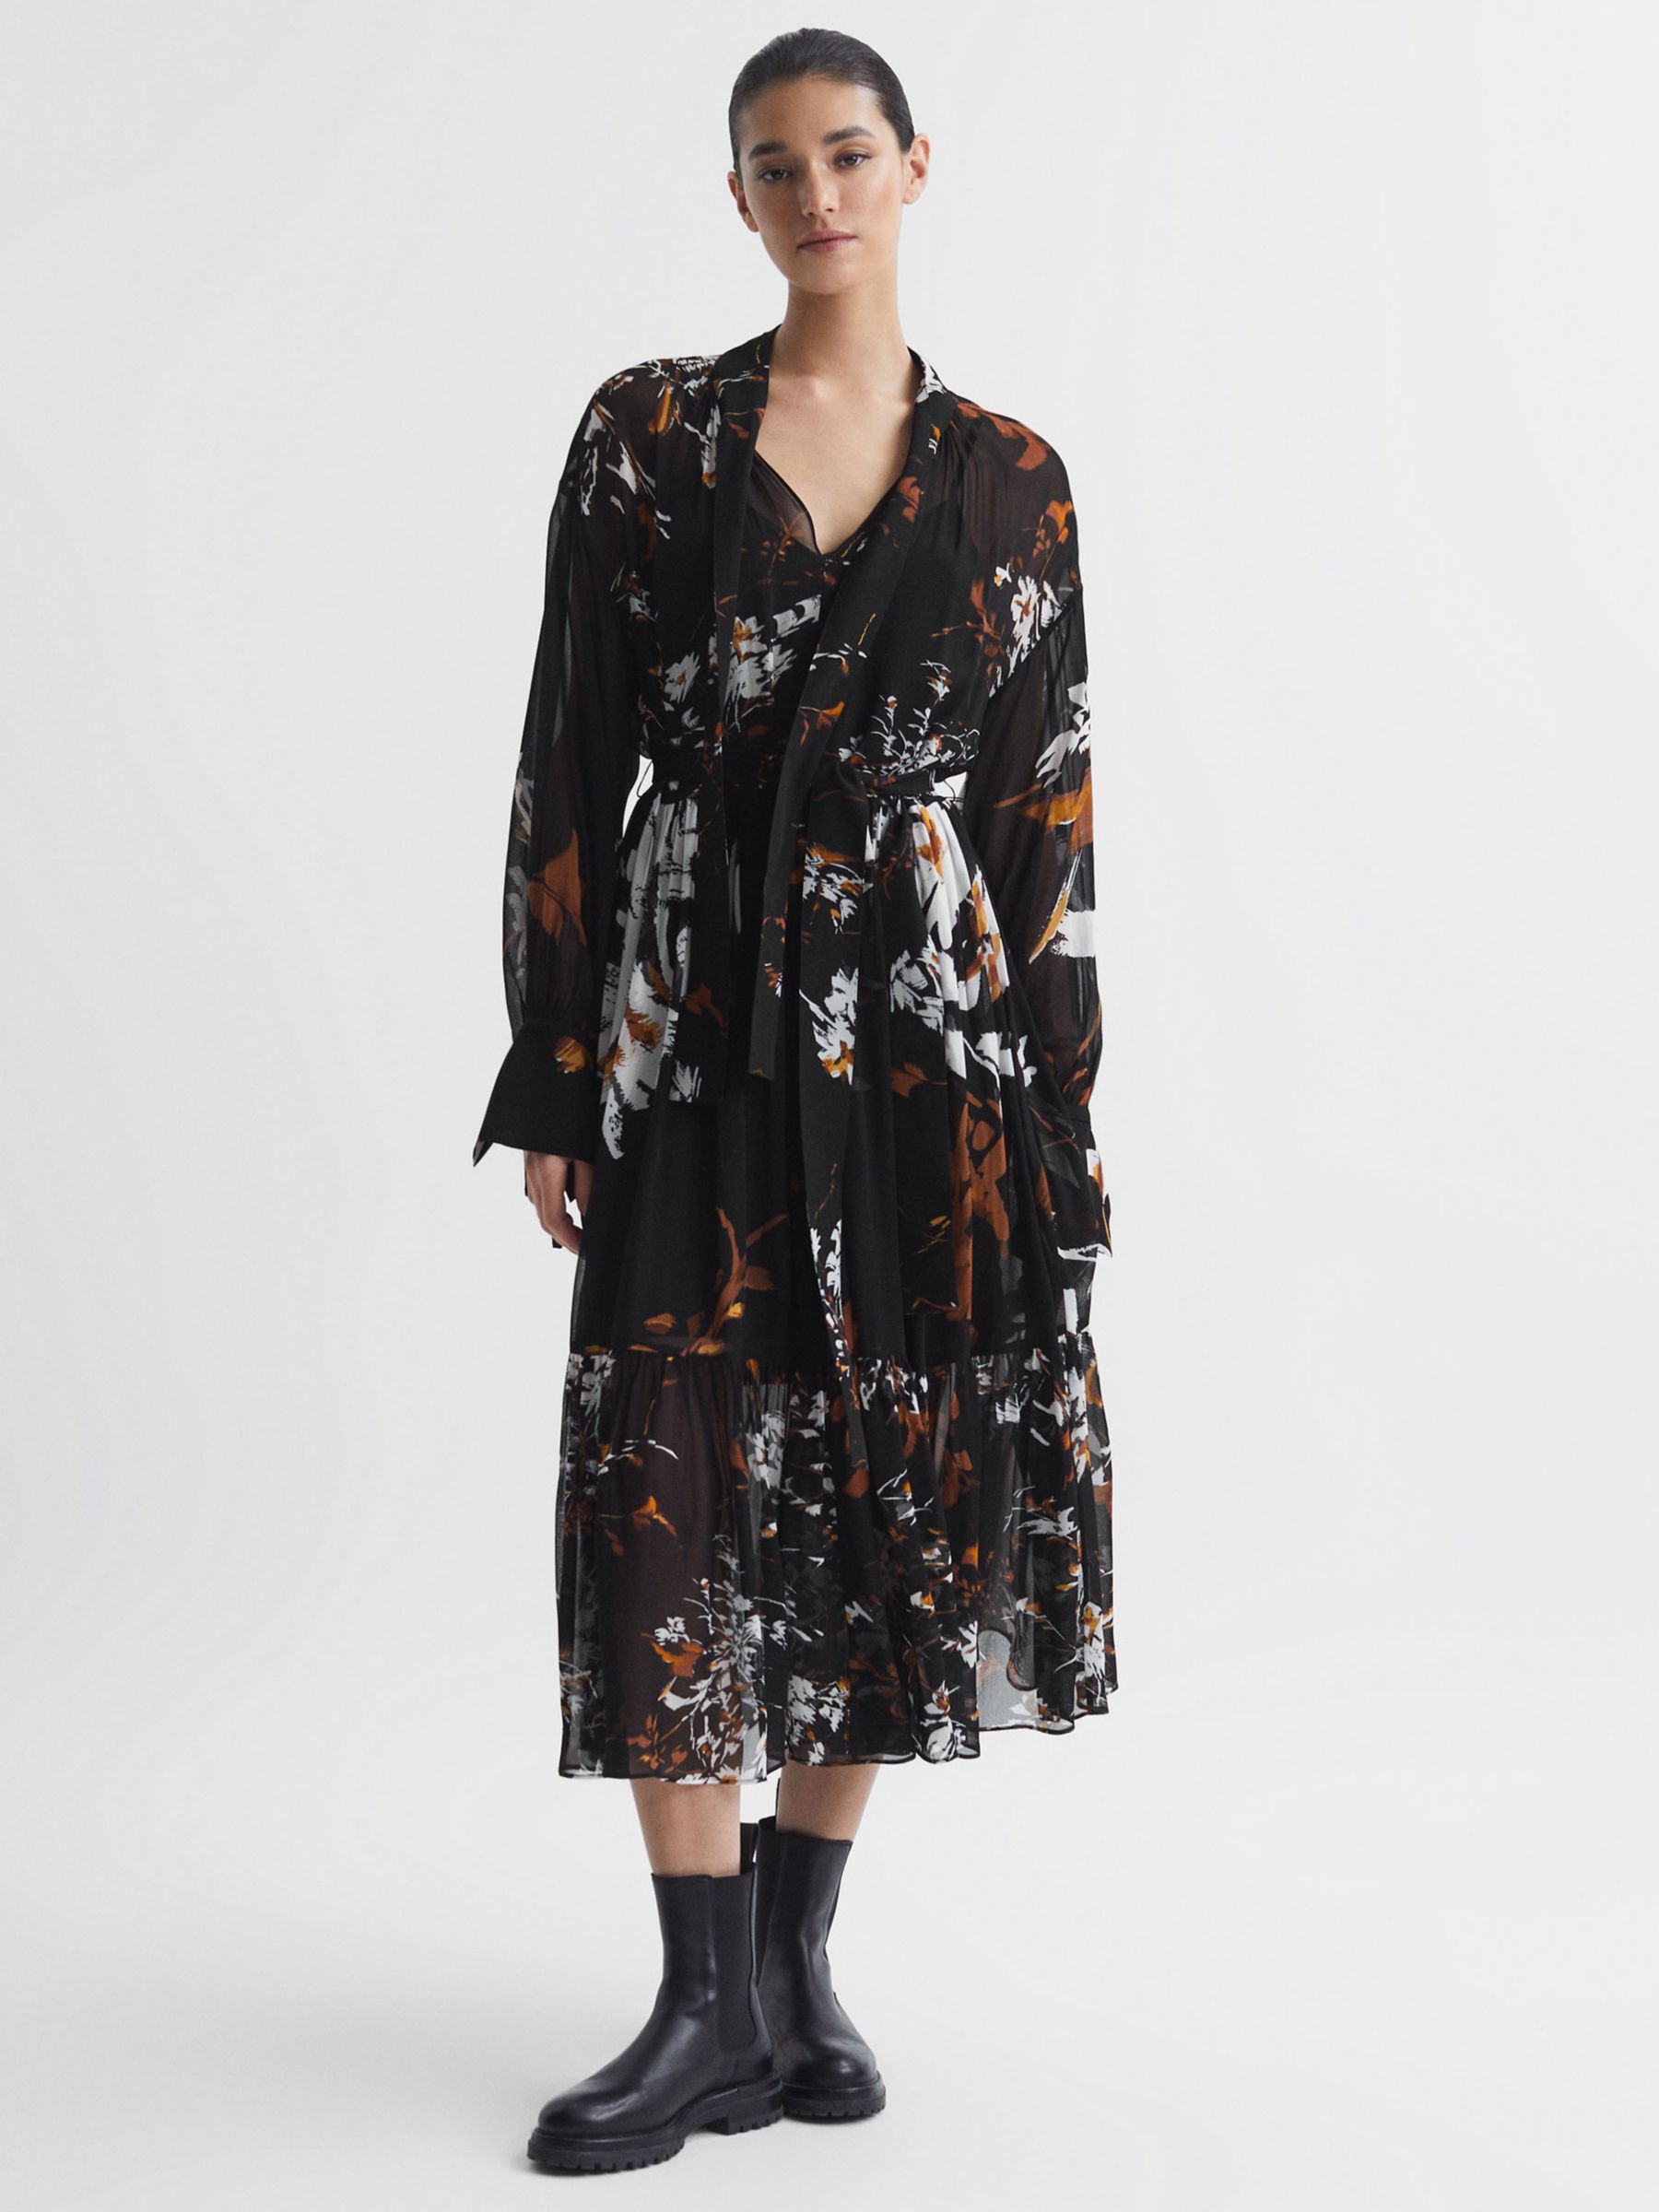 Reiss Charlotte Floral Tie Neck Midi Dress, Black/Multi, 6